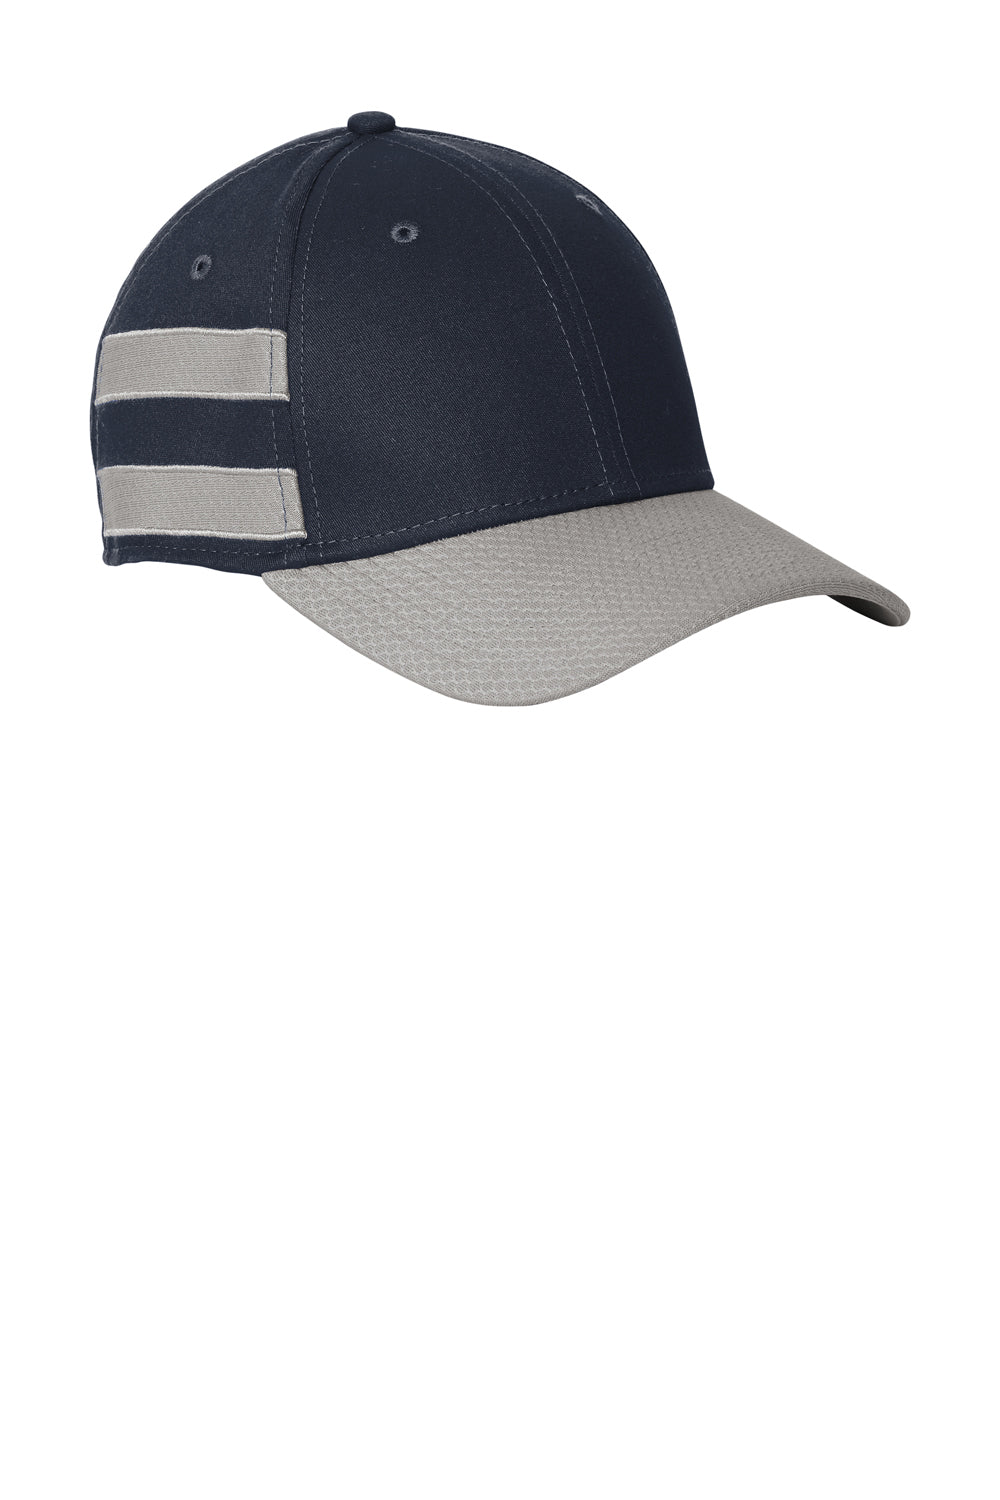 New Era NE1122 Striped Stretch Fit Hat Deep Navy Blue/Grey Back